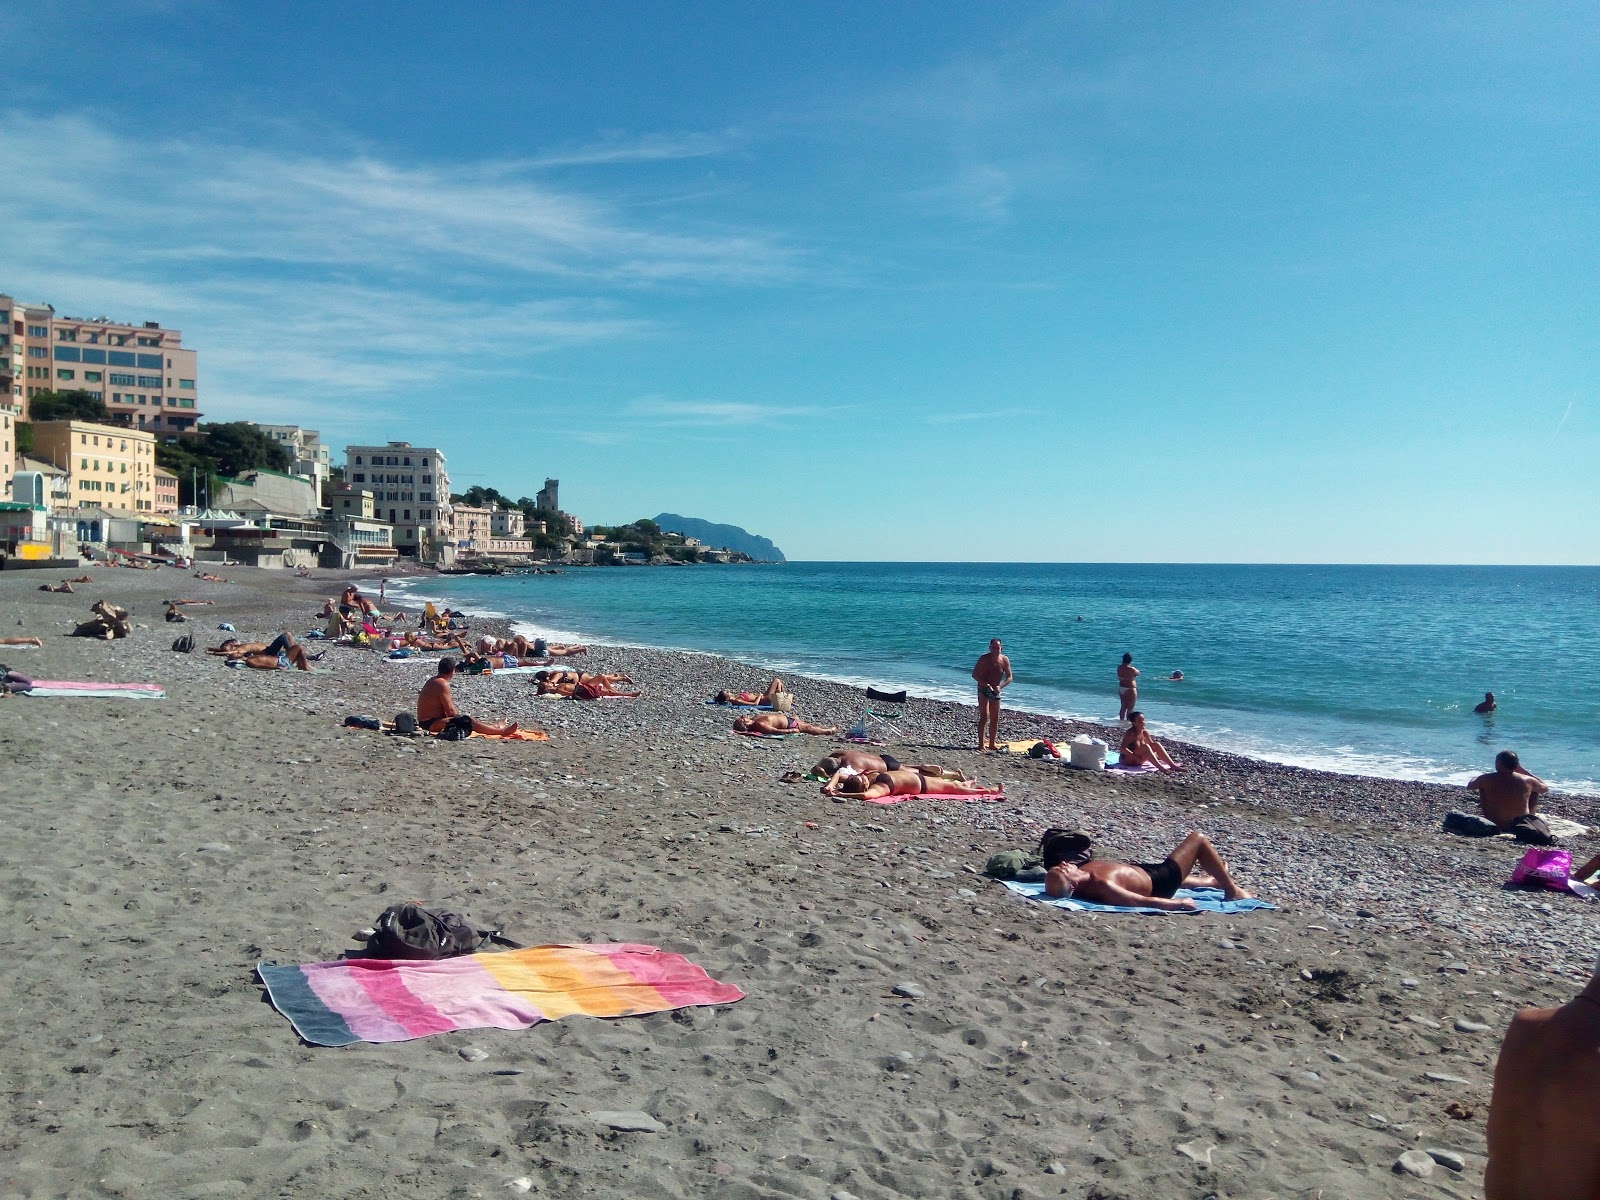 Fotografie cu Spiaggia Sturla cu nivelul de curățenie in medie